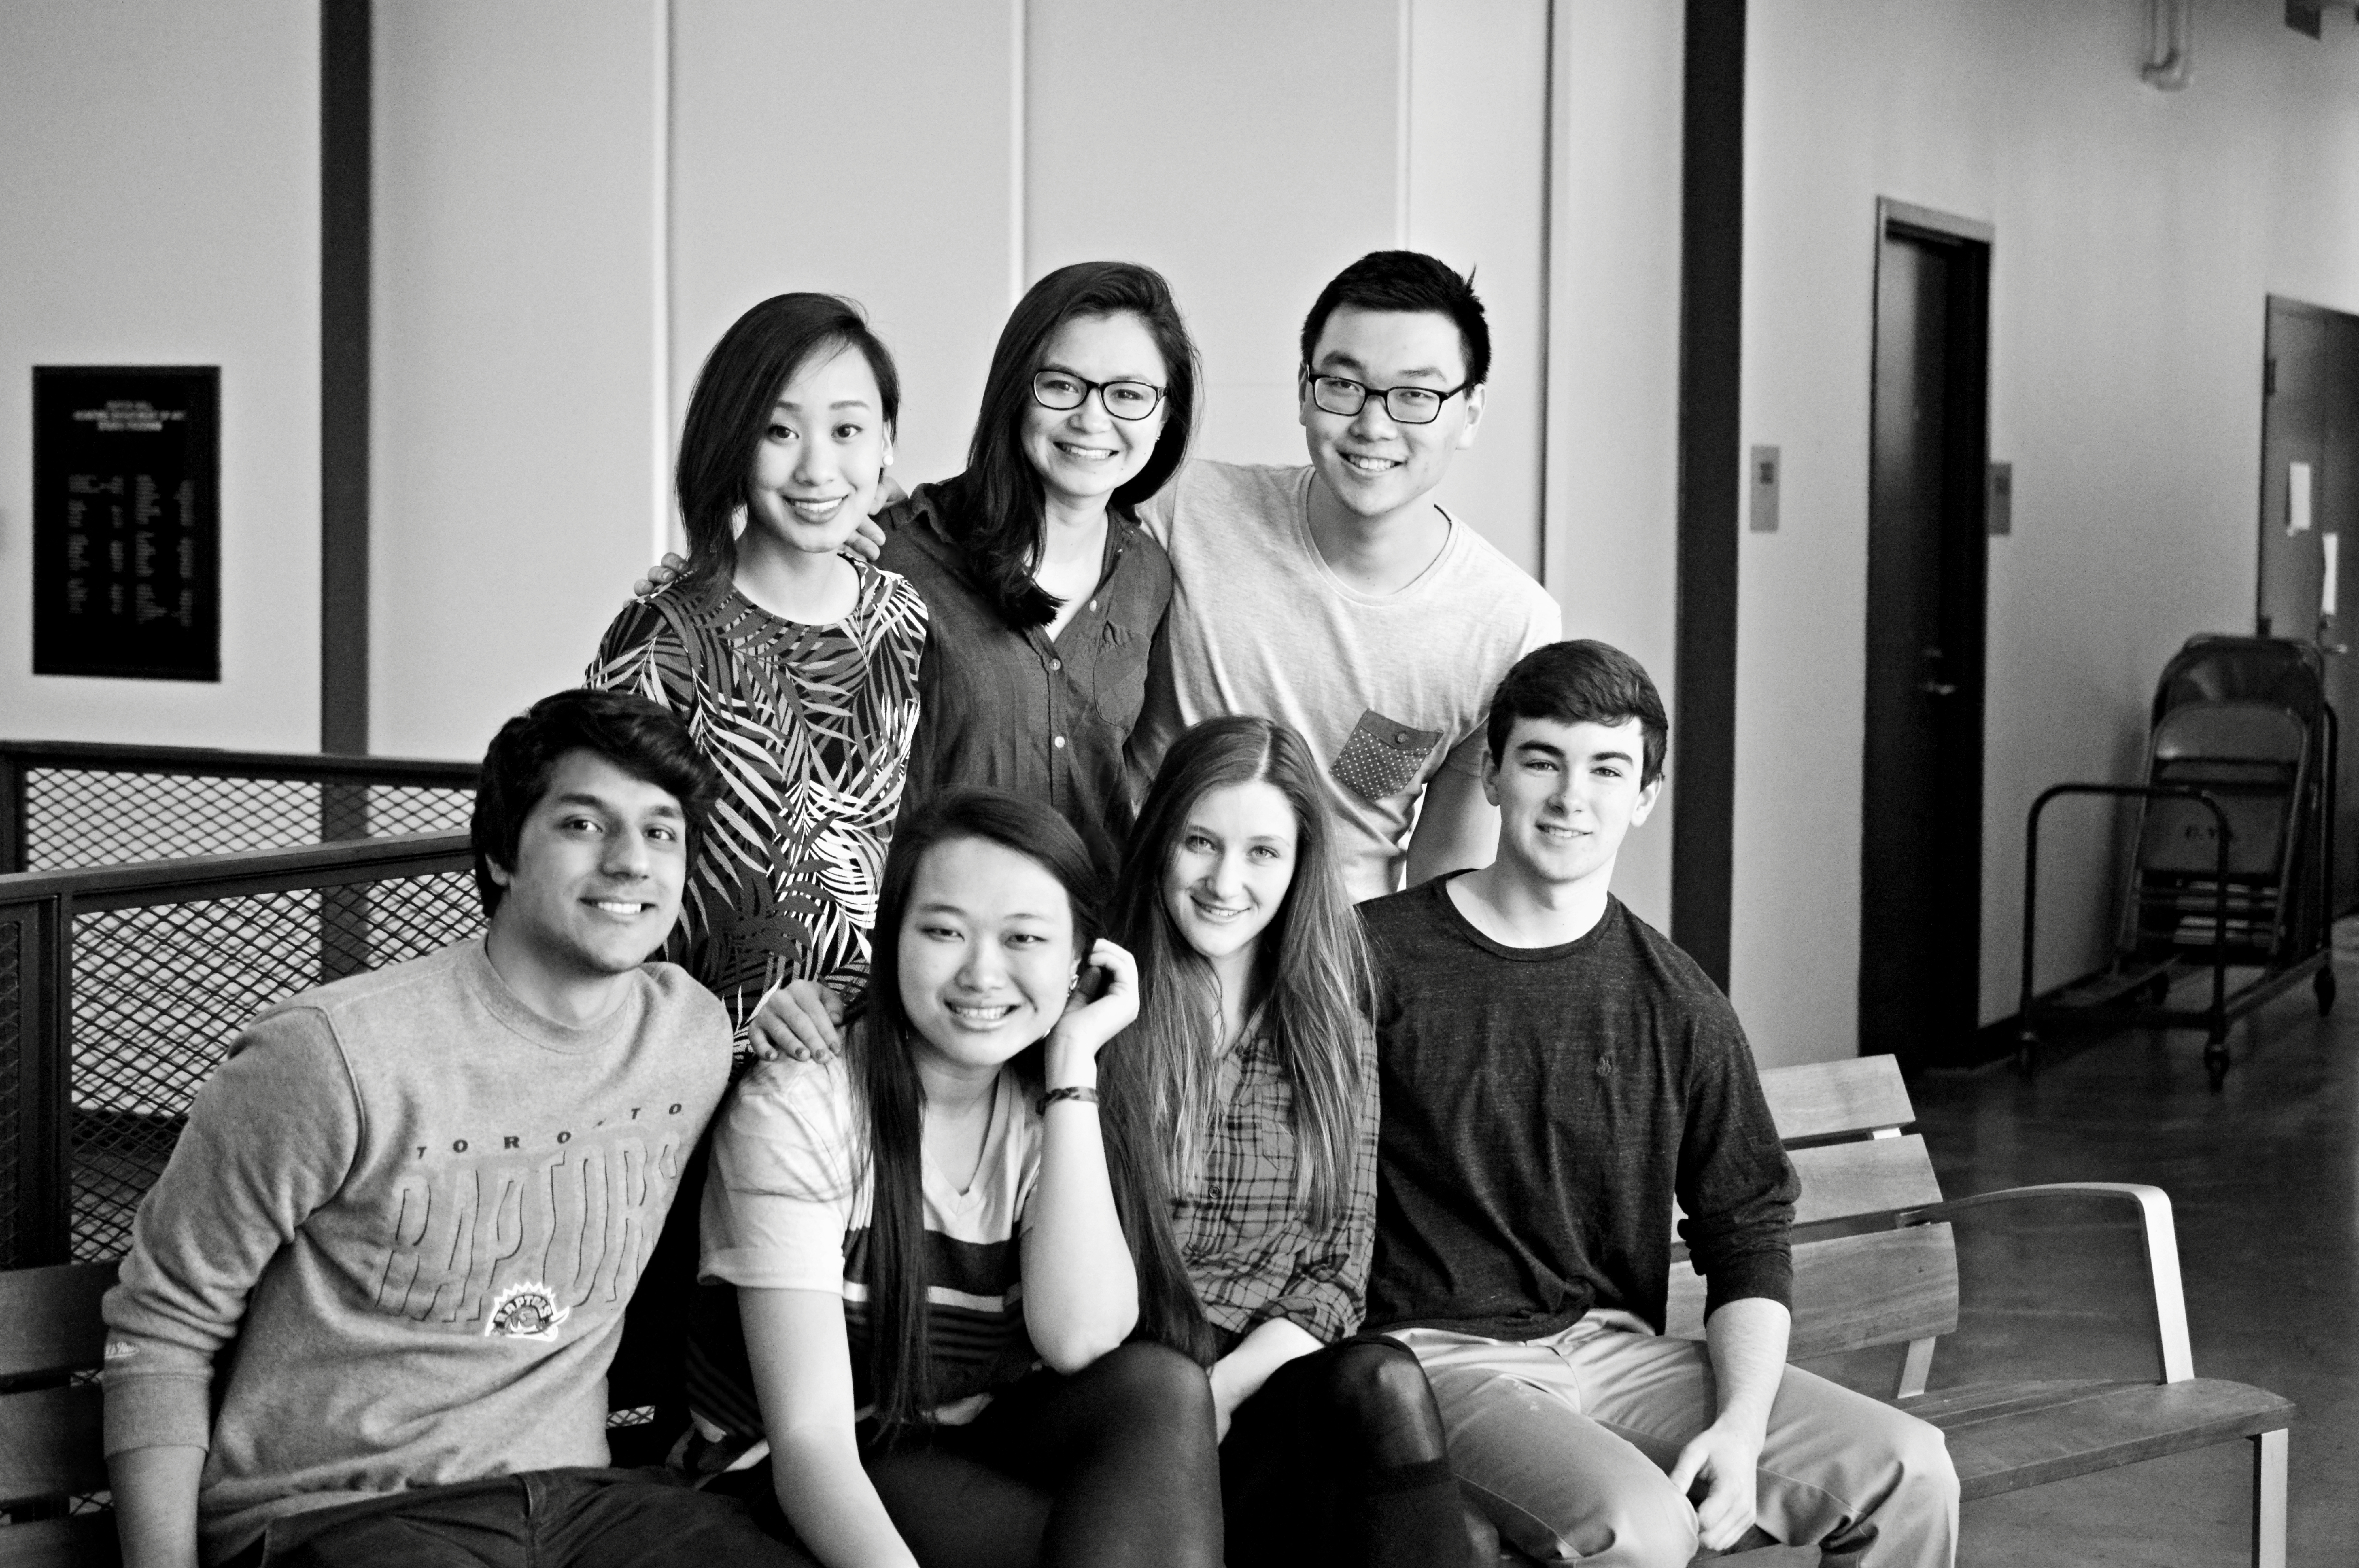 Group photo Top row, left to right: Katherine Jiang, Tania Ermak, Wu. Bottom row, left to right: Karan Baboota, Ariel Kao, Miller, Cameron Upshaw.